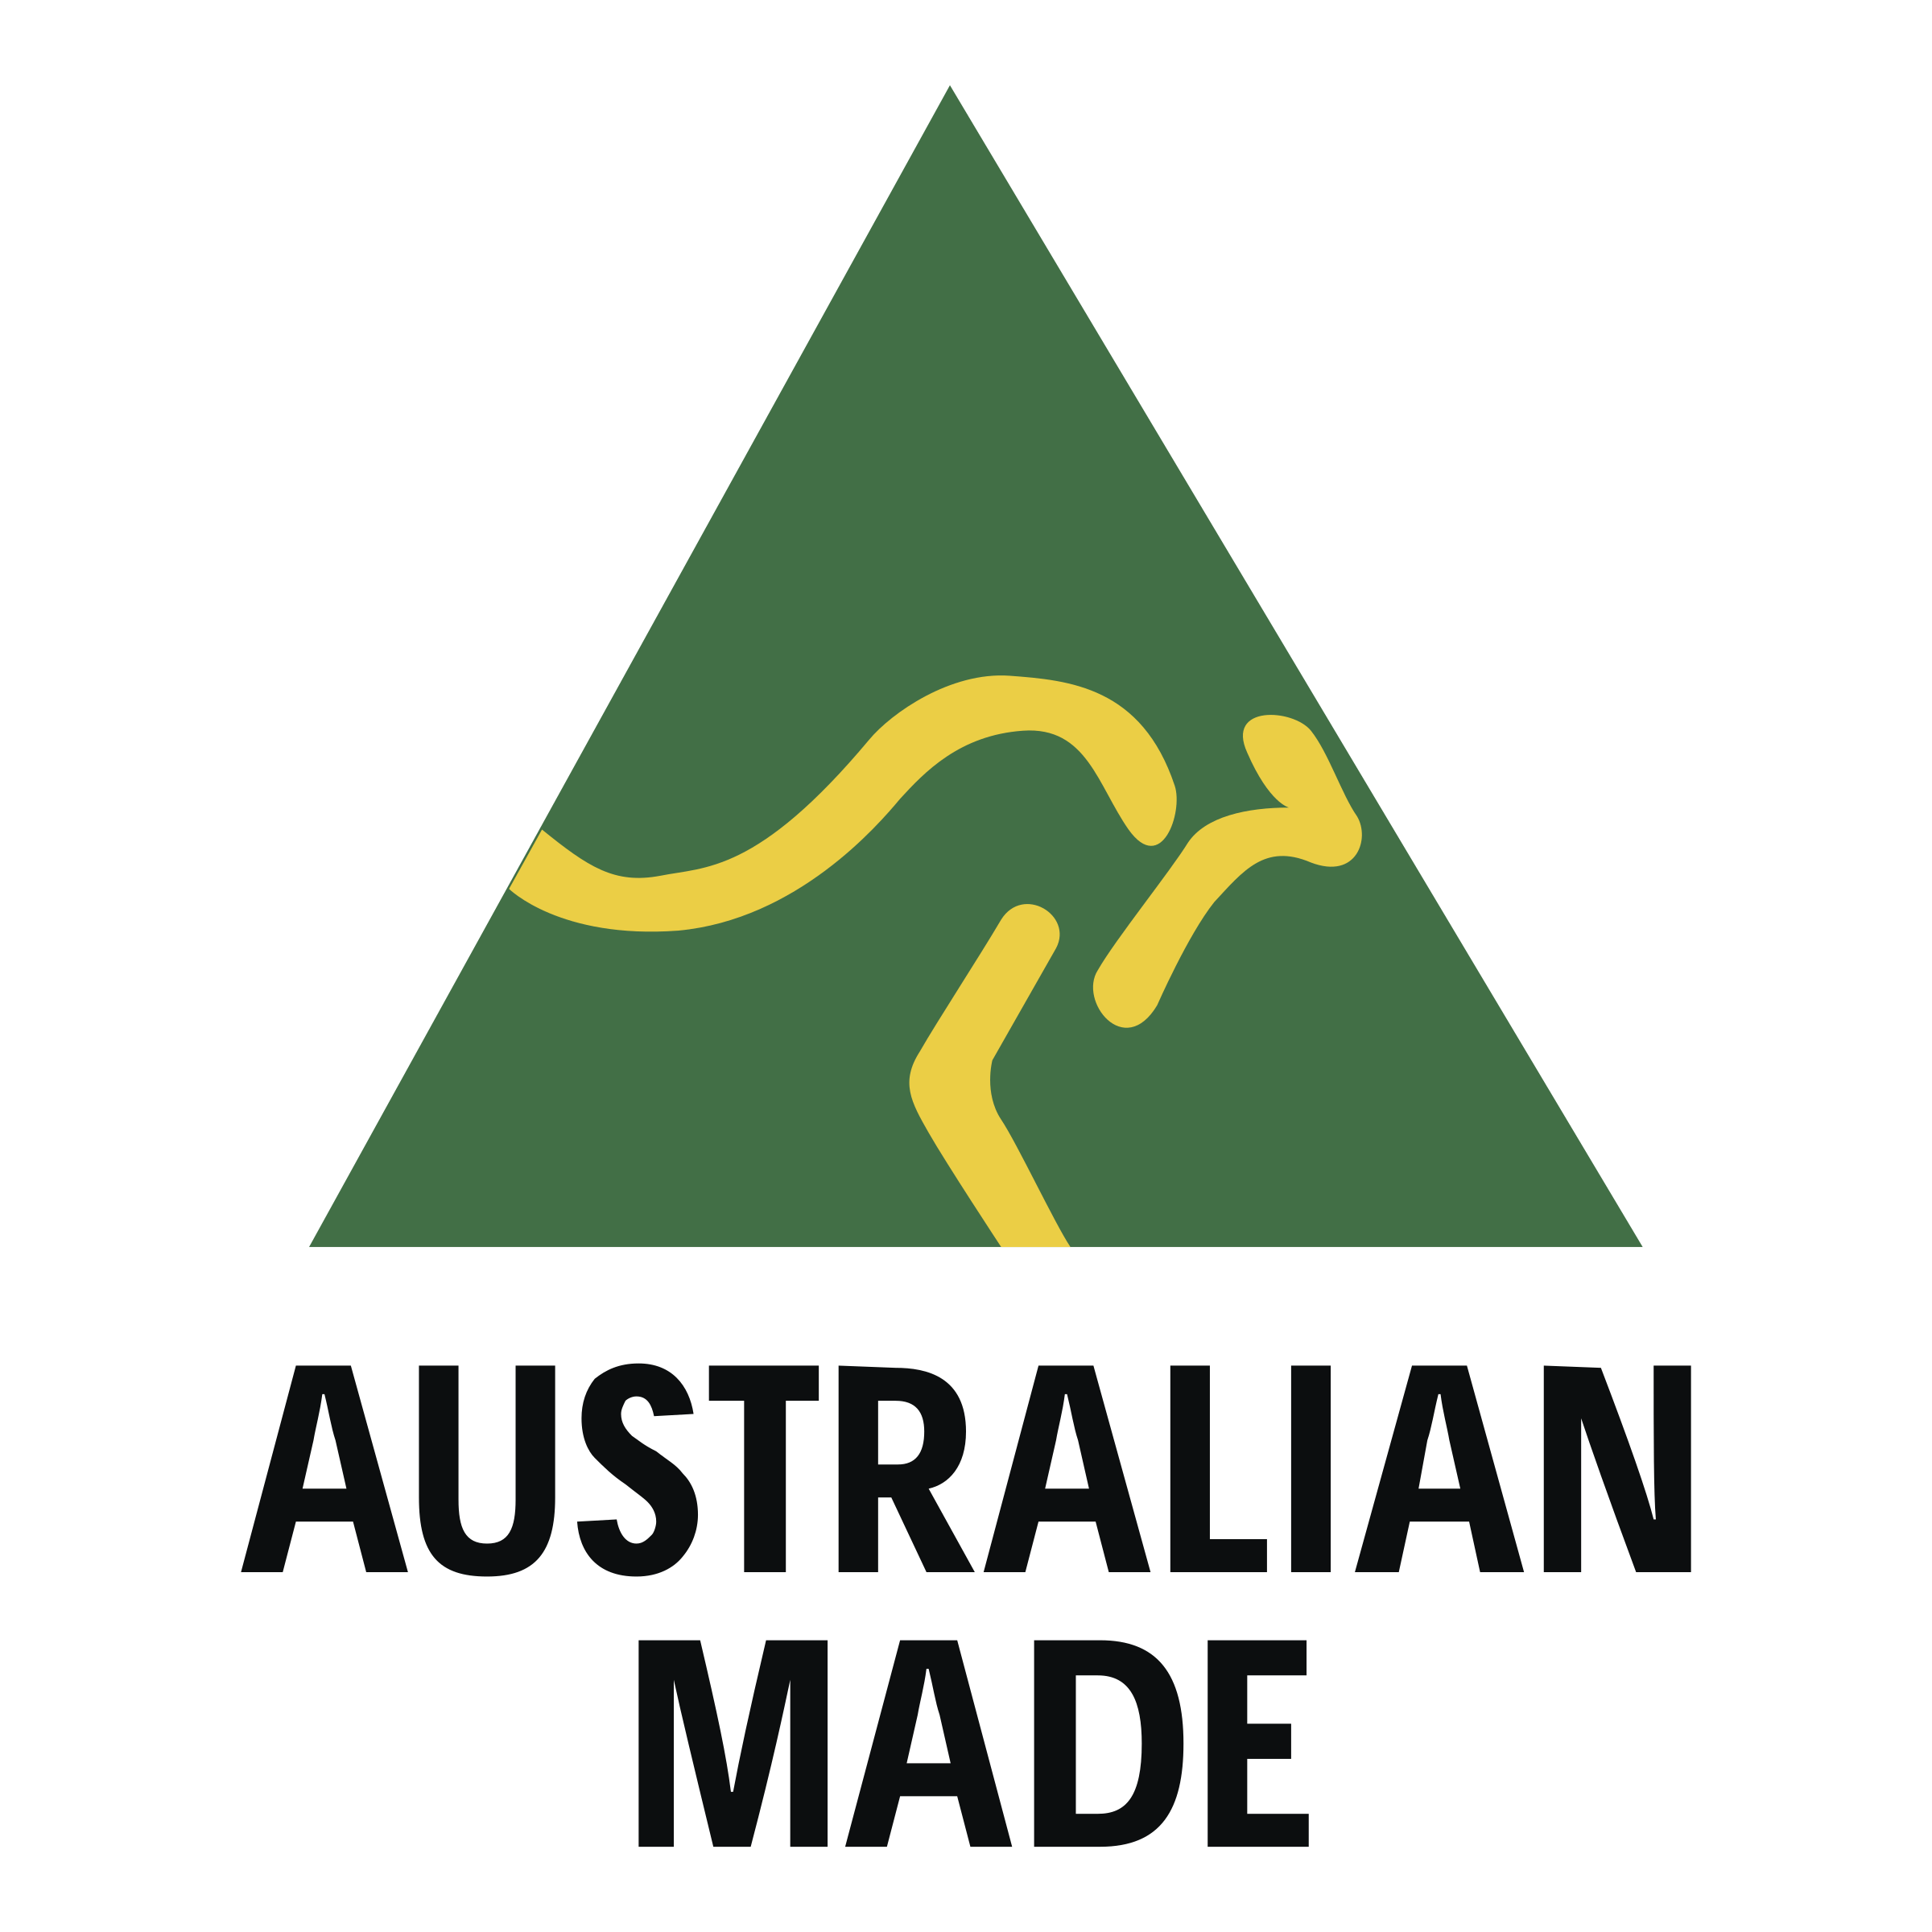 Australian Made Logo - Australian Made Logo PNG Transparent & SVG Vector - Freebie Supply